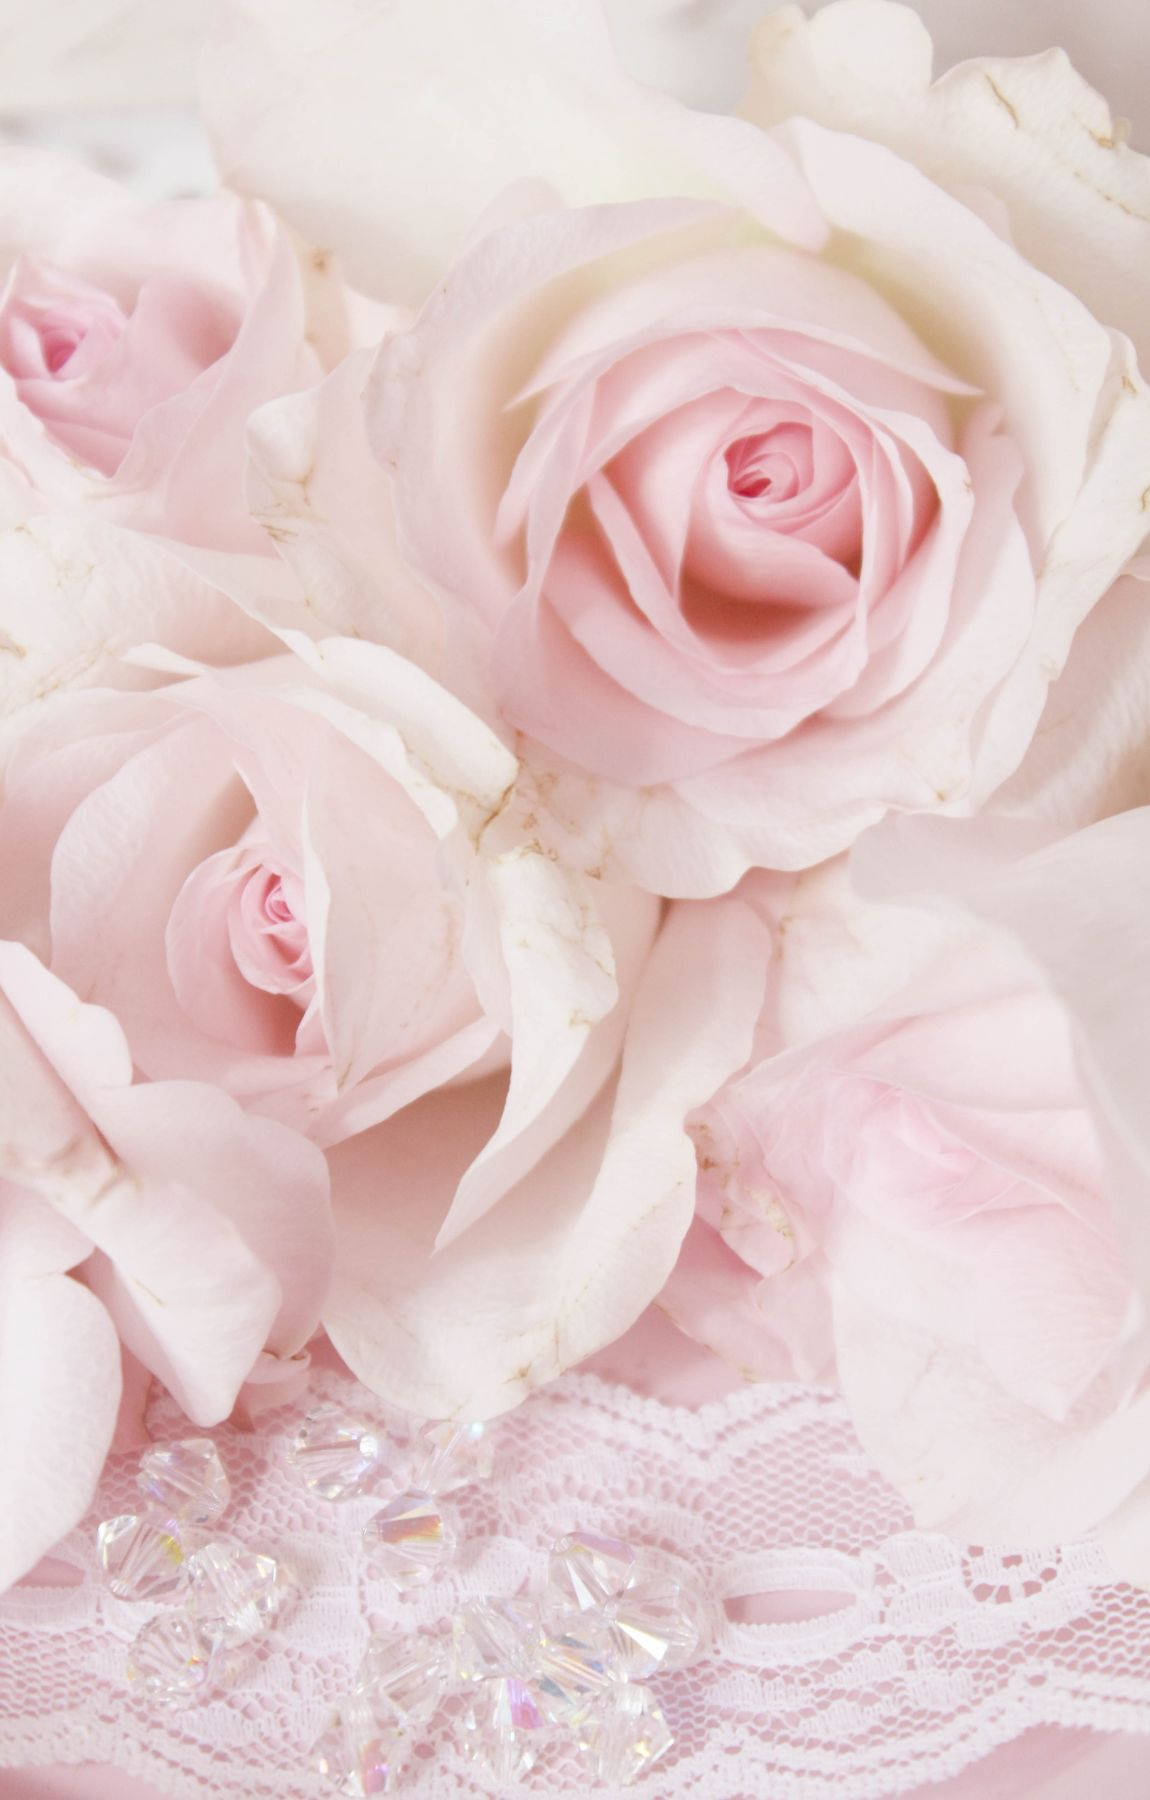 Buy 35 Light Pink Rose Flower Blush Pink Artificial Rose Online in India   Etsy